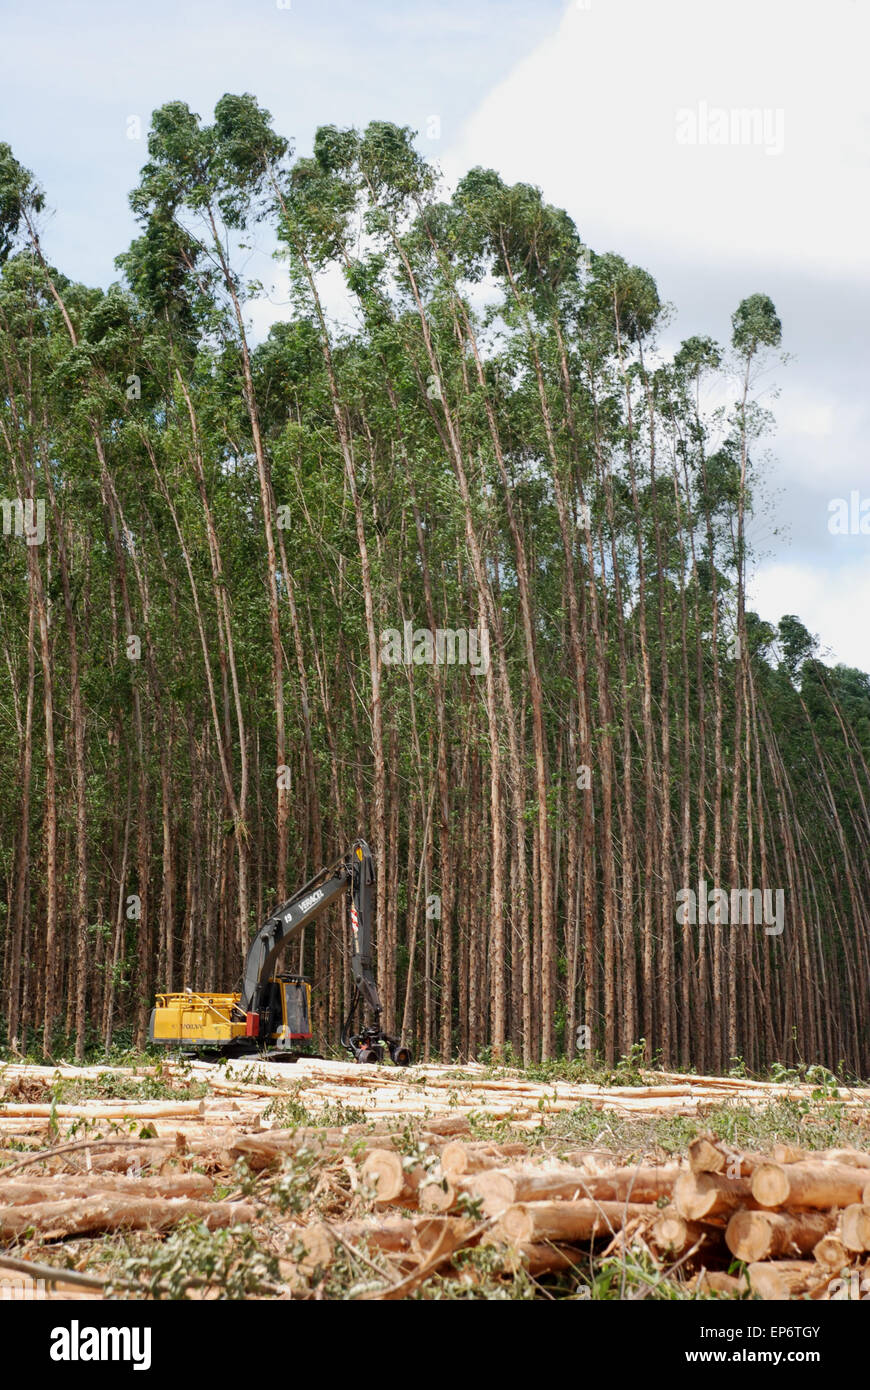 Bahia, Brazil: deforestation Stock Photo